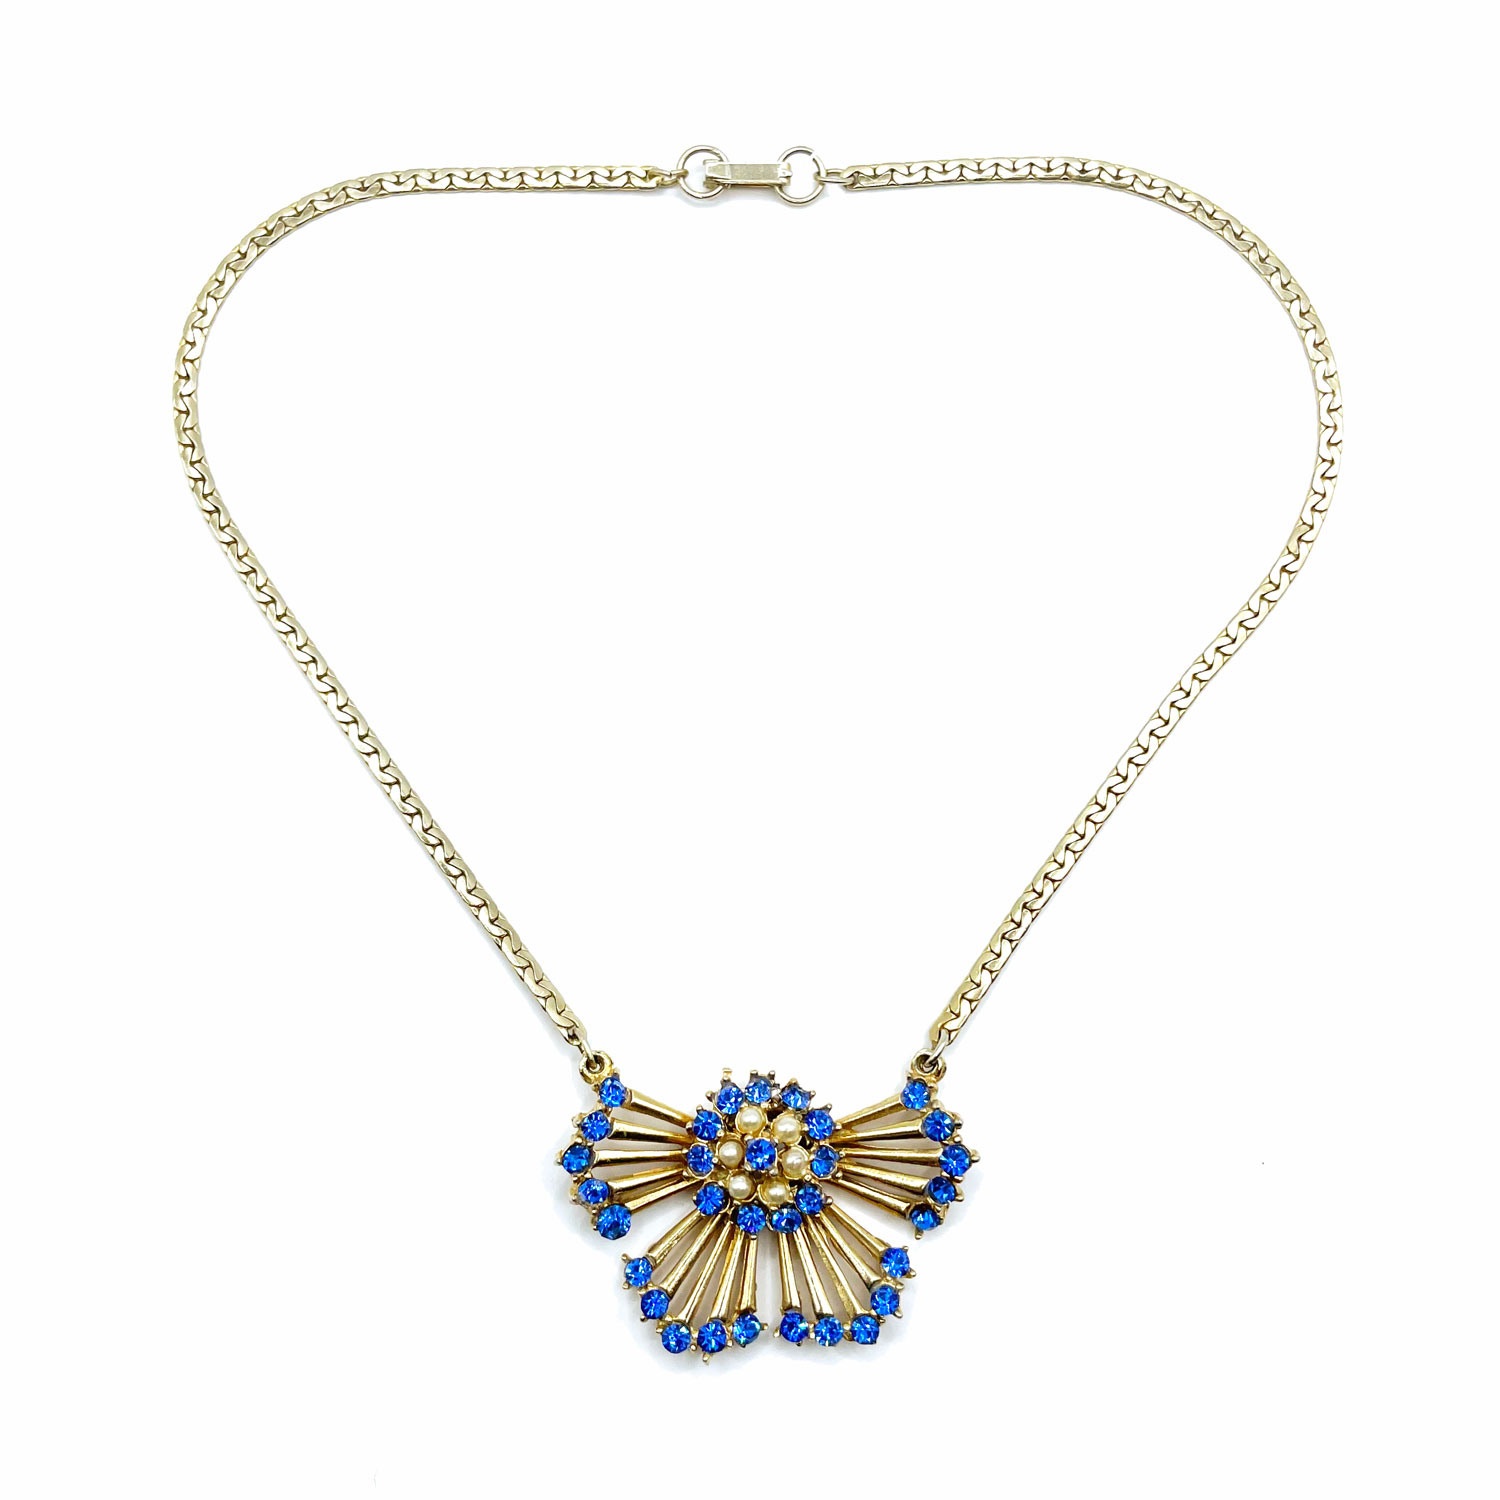 1940s blue rhinestone necklace